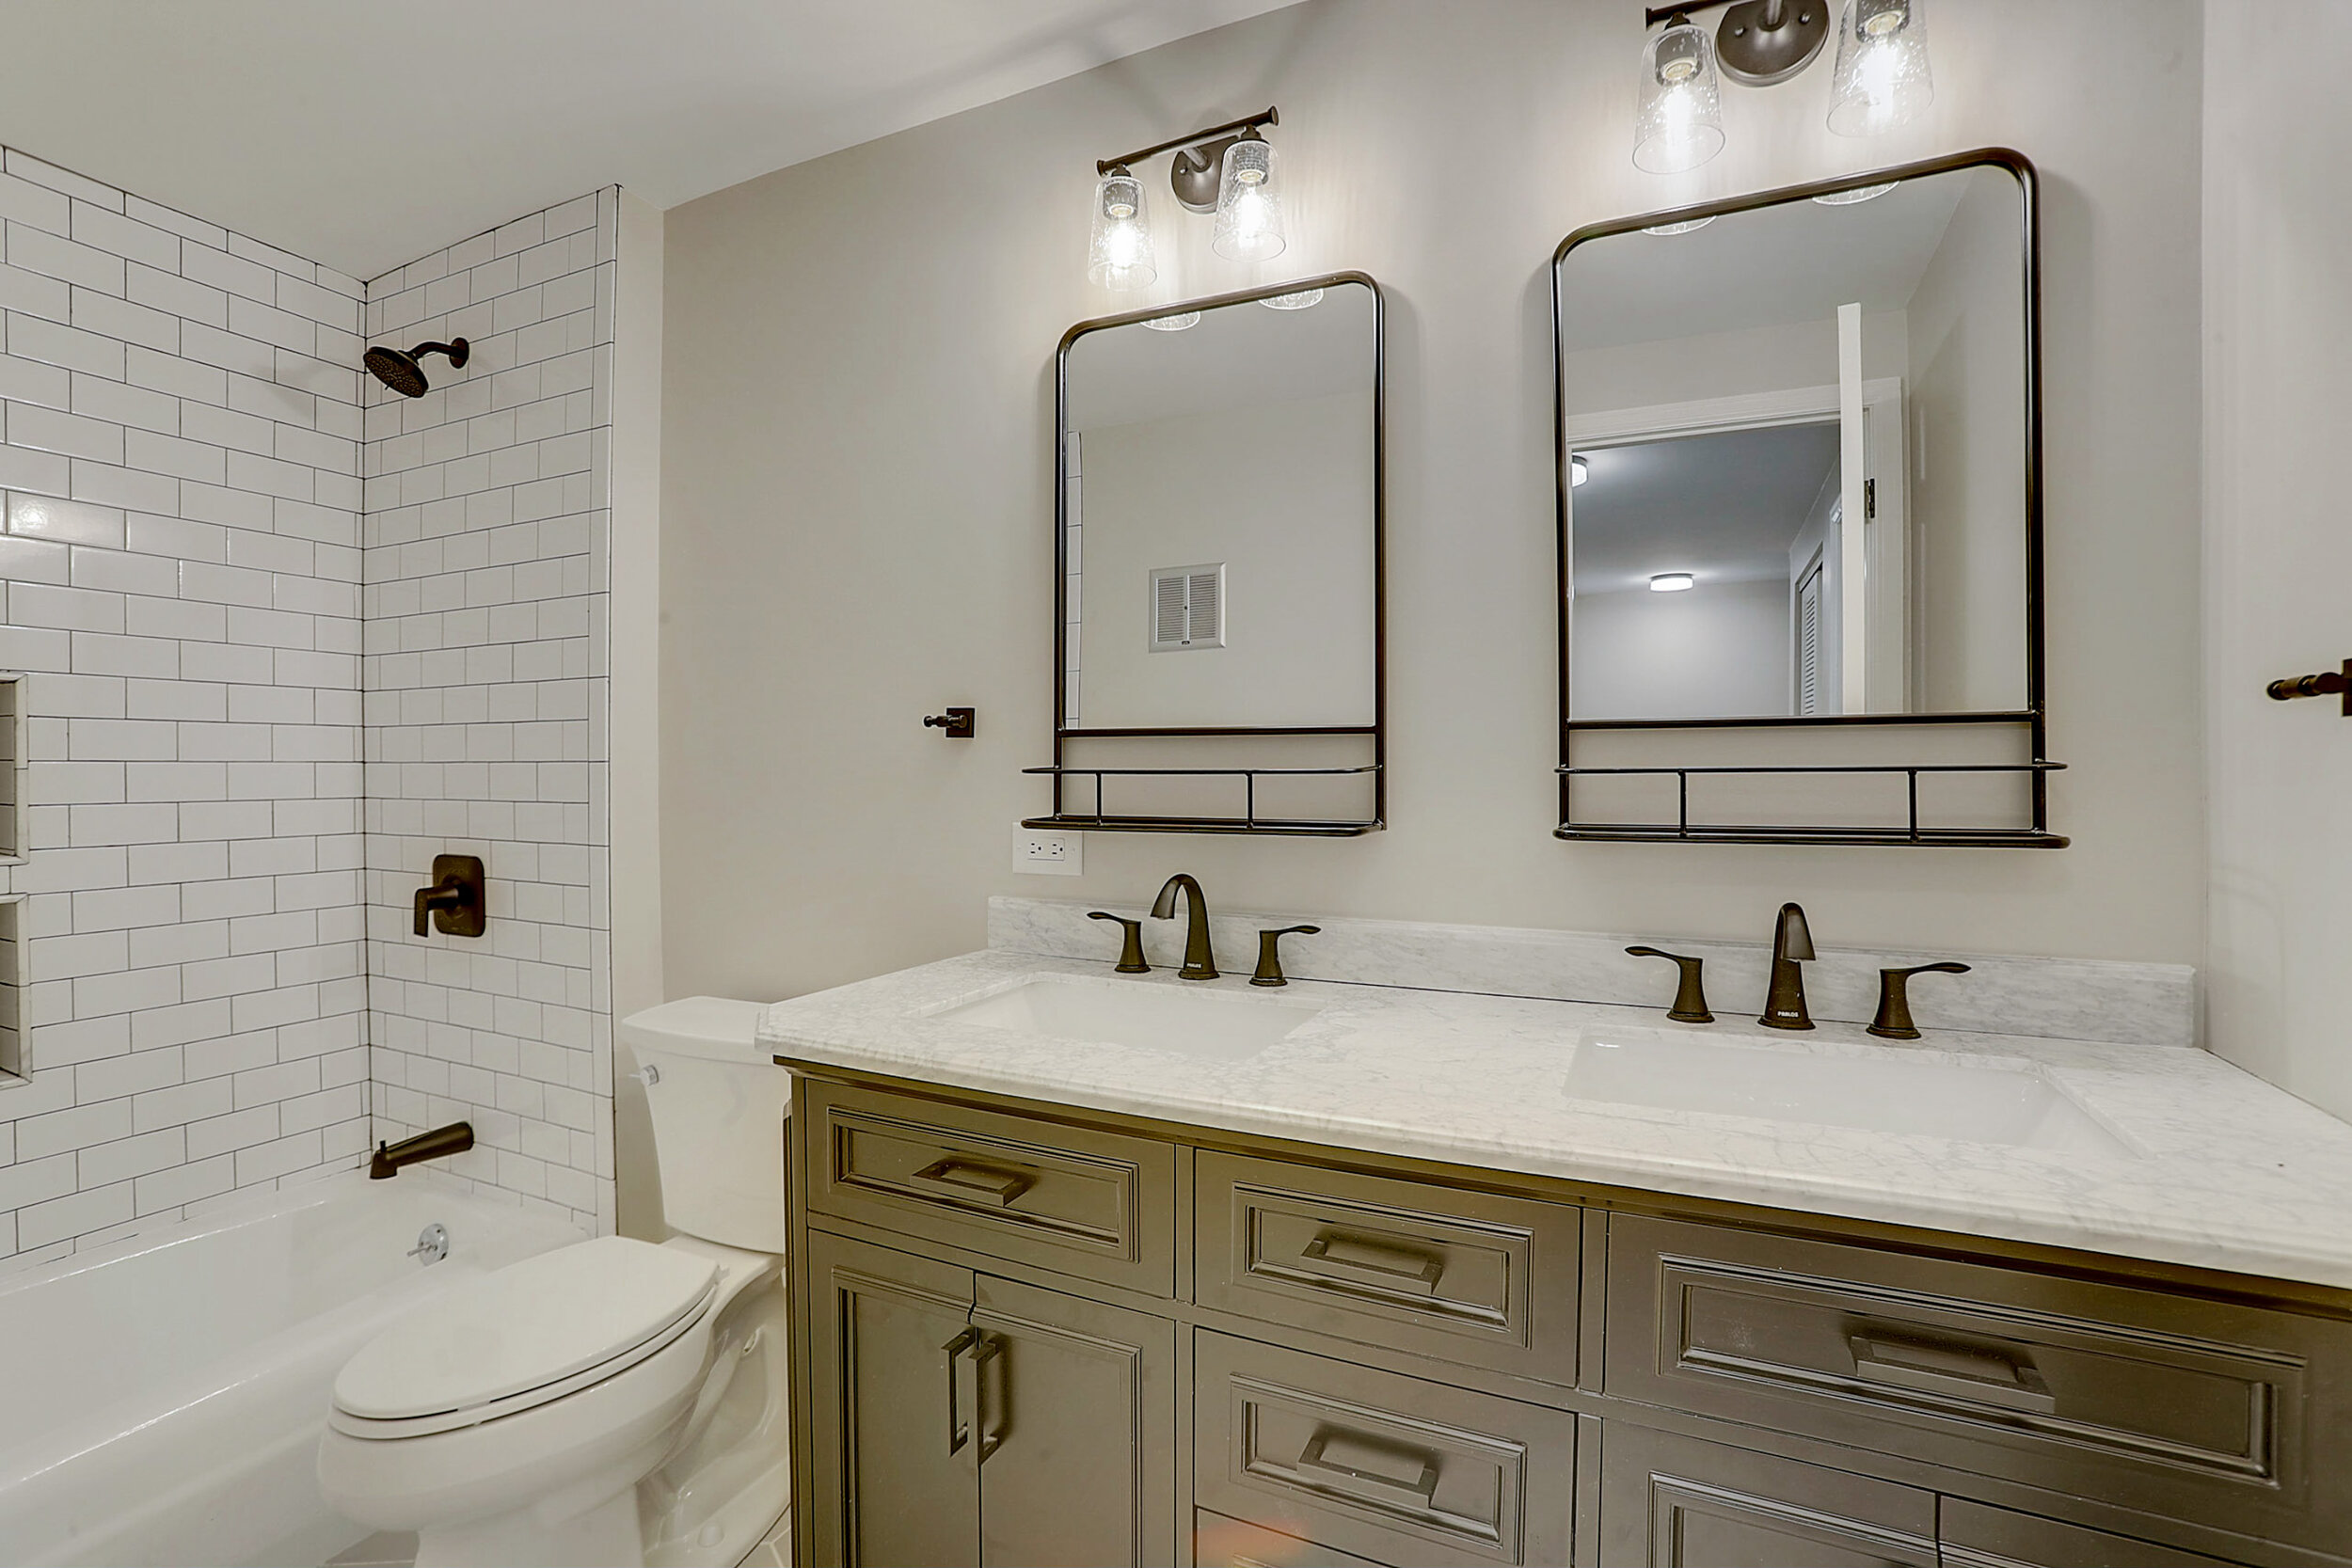 Luxury Bathroom Interior Design Services in Chicago IL